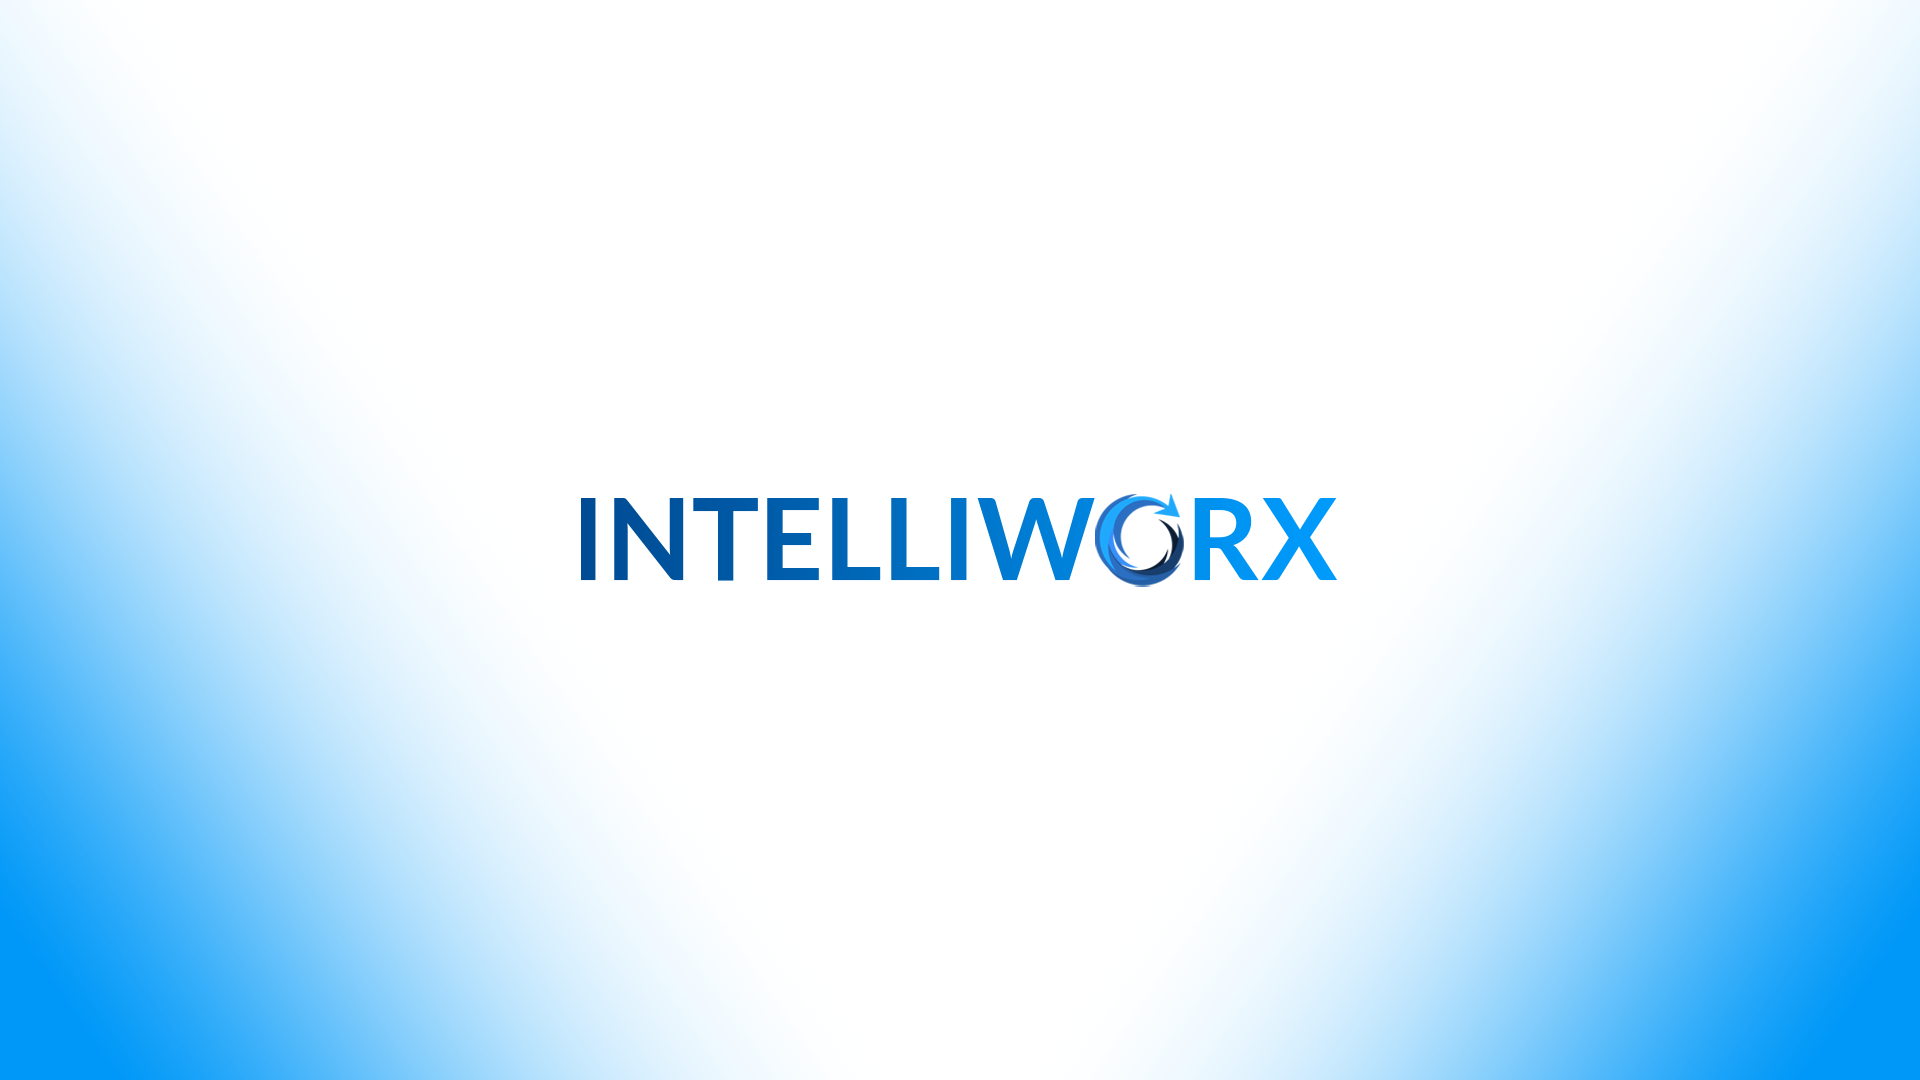 intelliworx logo 1920x1080 1